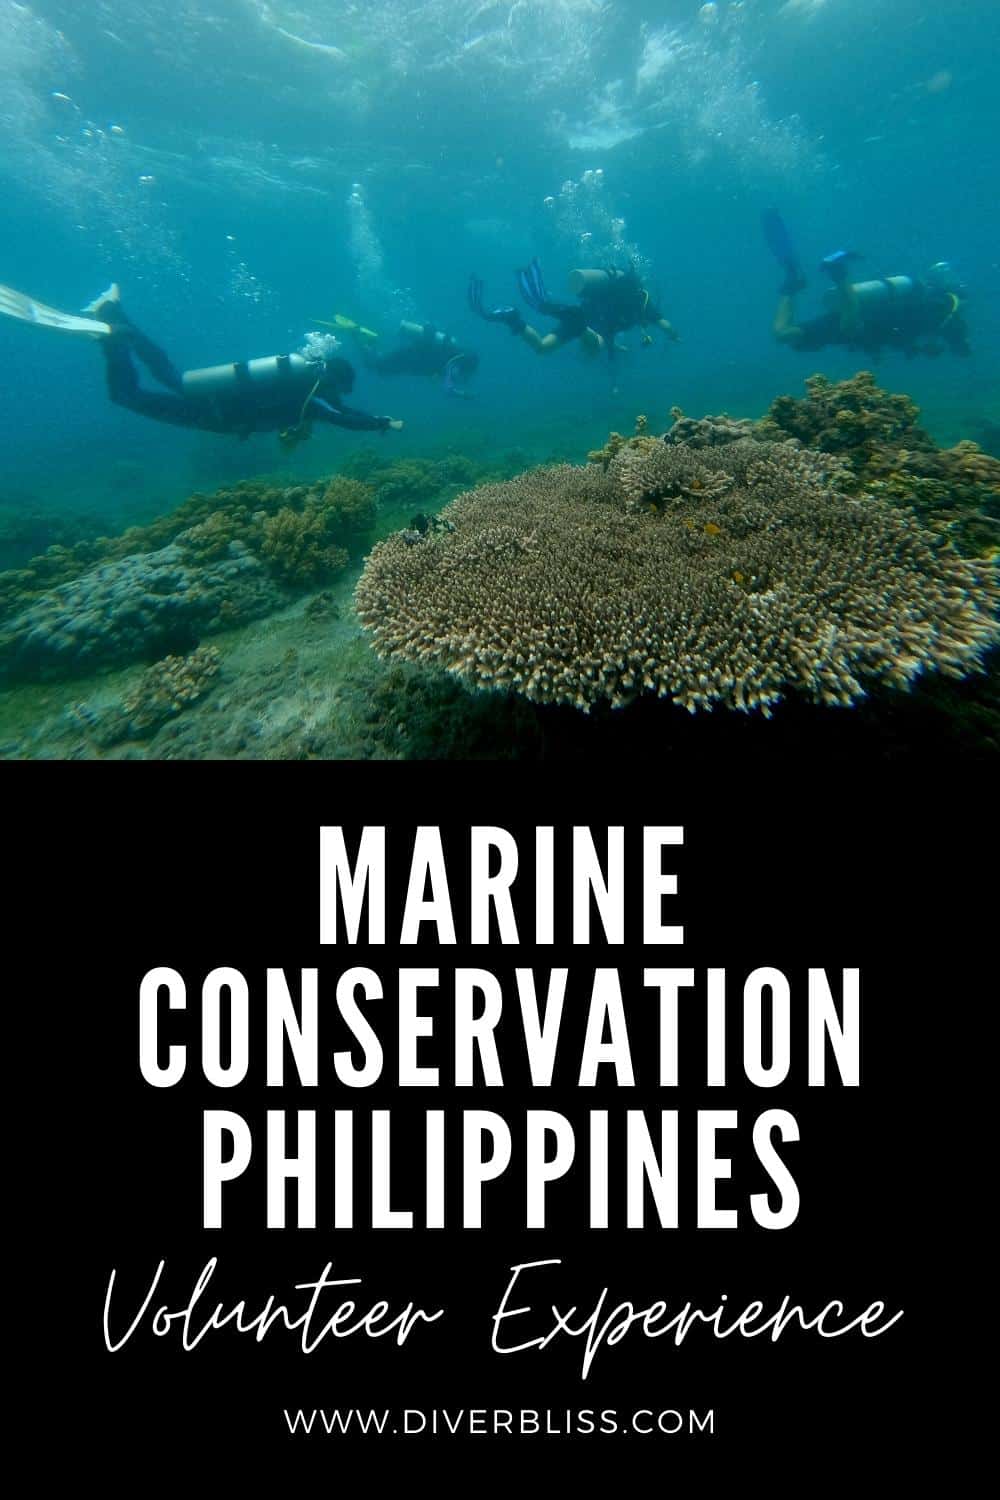 Marine conservation philippines volunteer experience